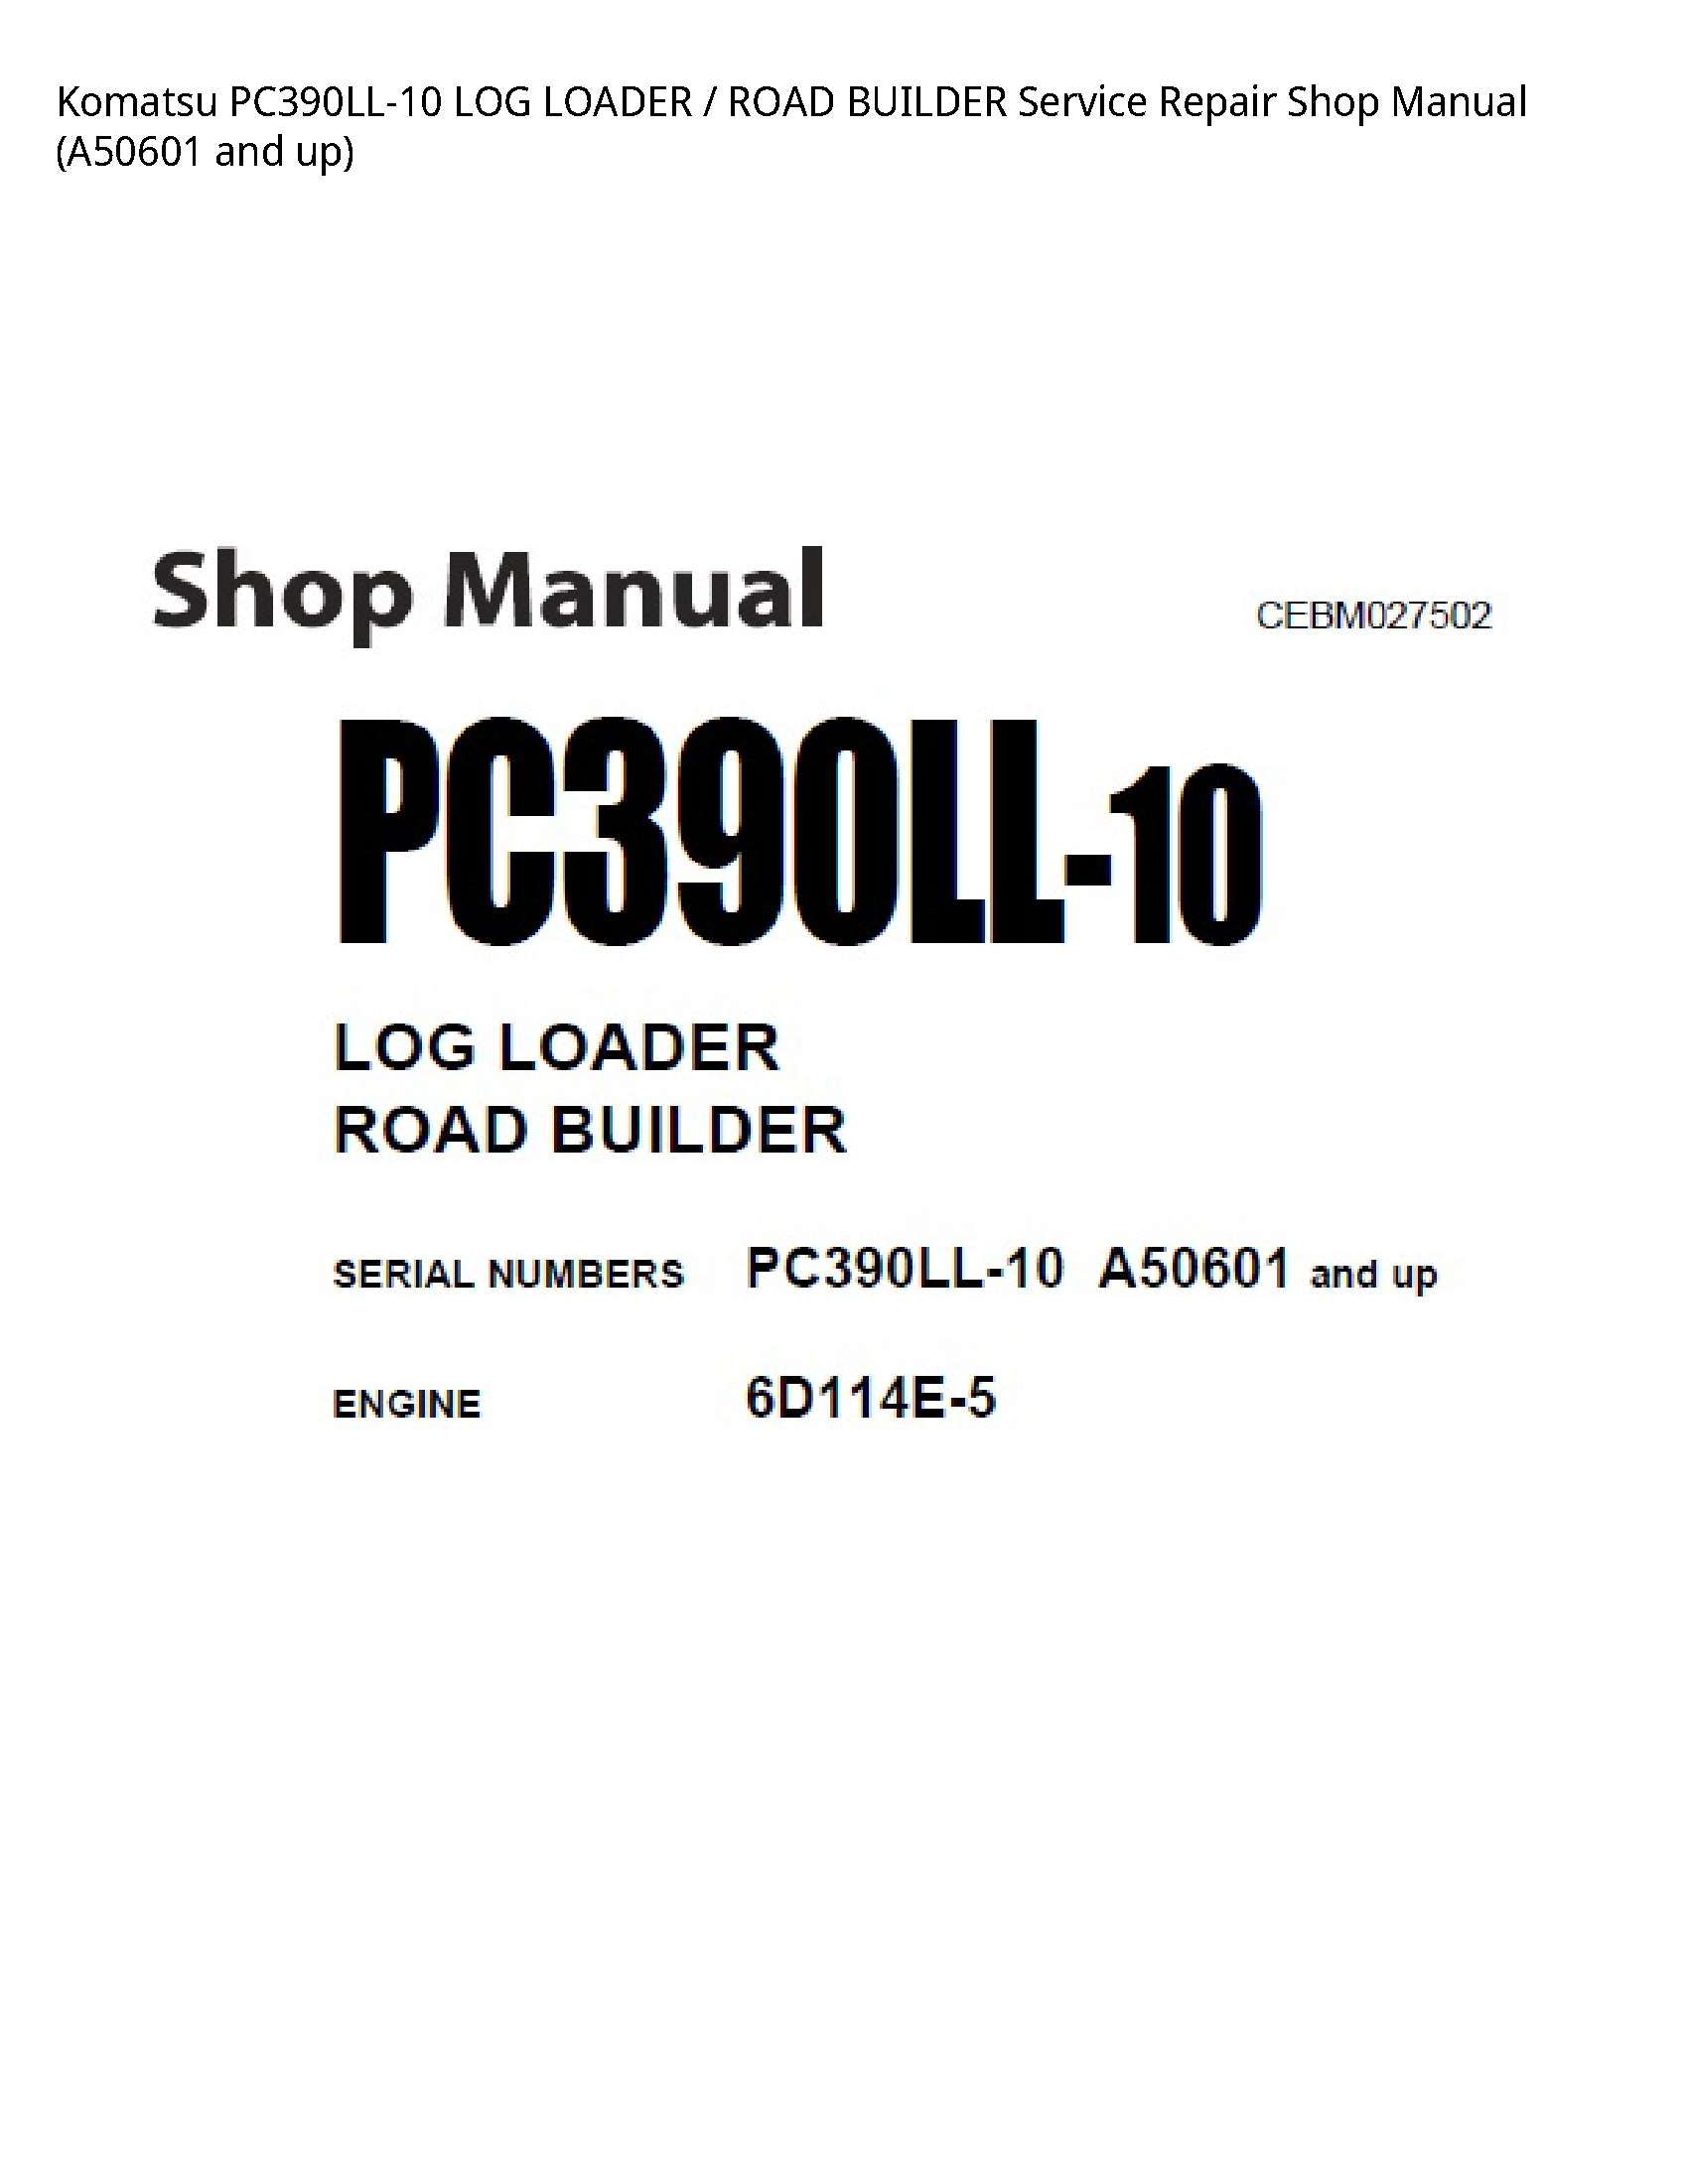 KOMATSU PC390LL-10 LOG LOADER ROAD BUILDER manual